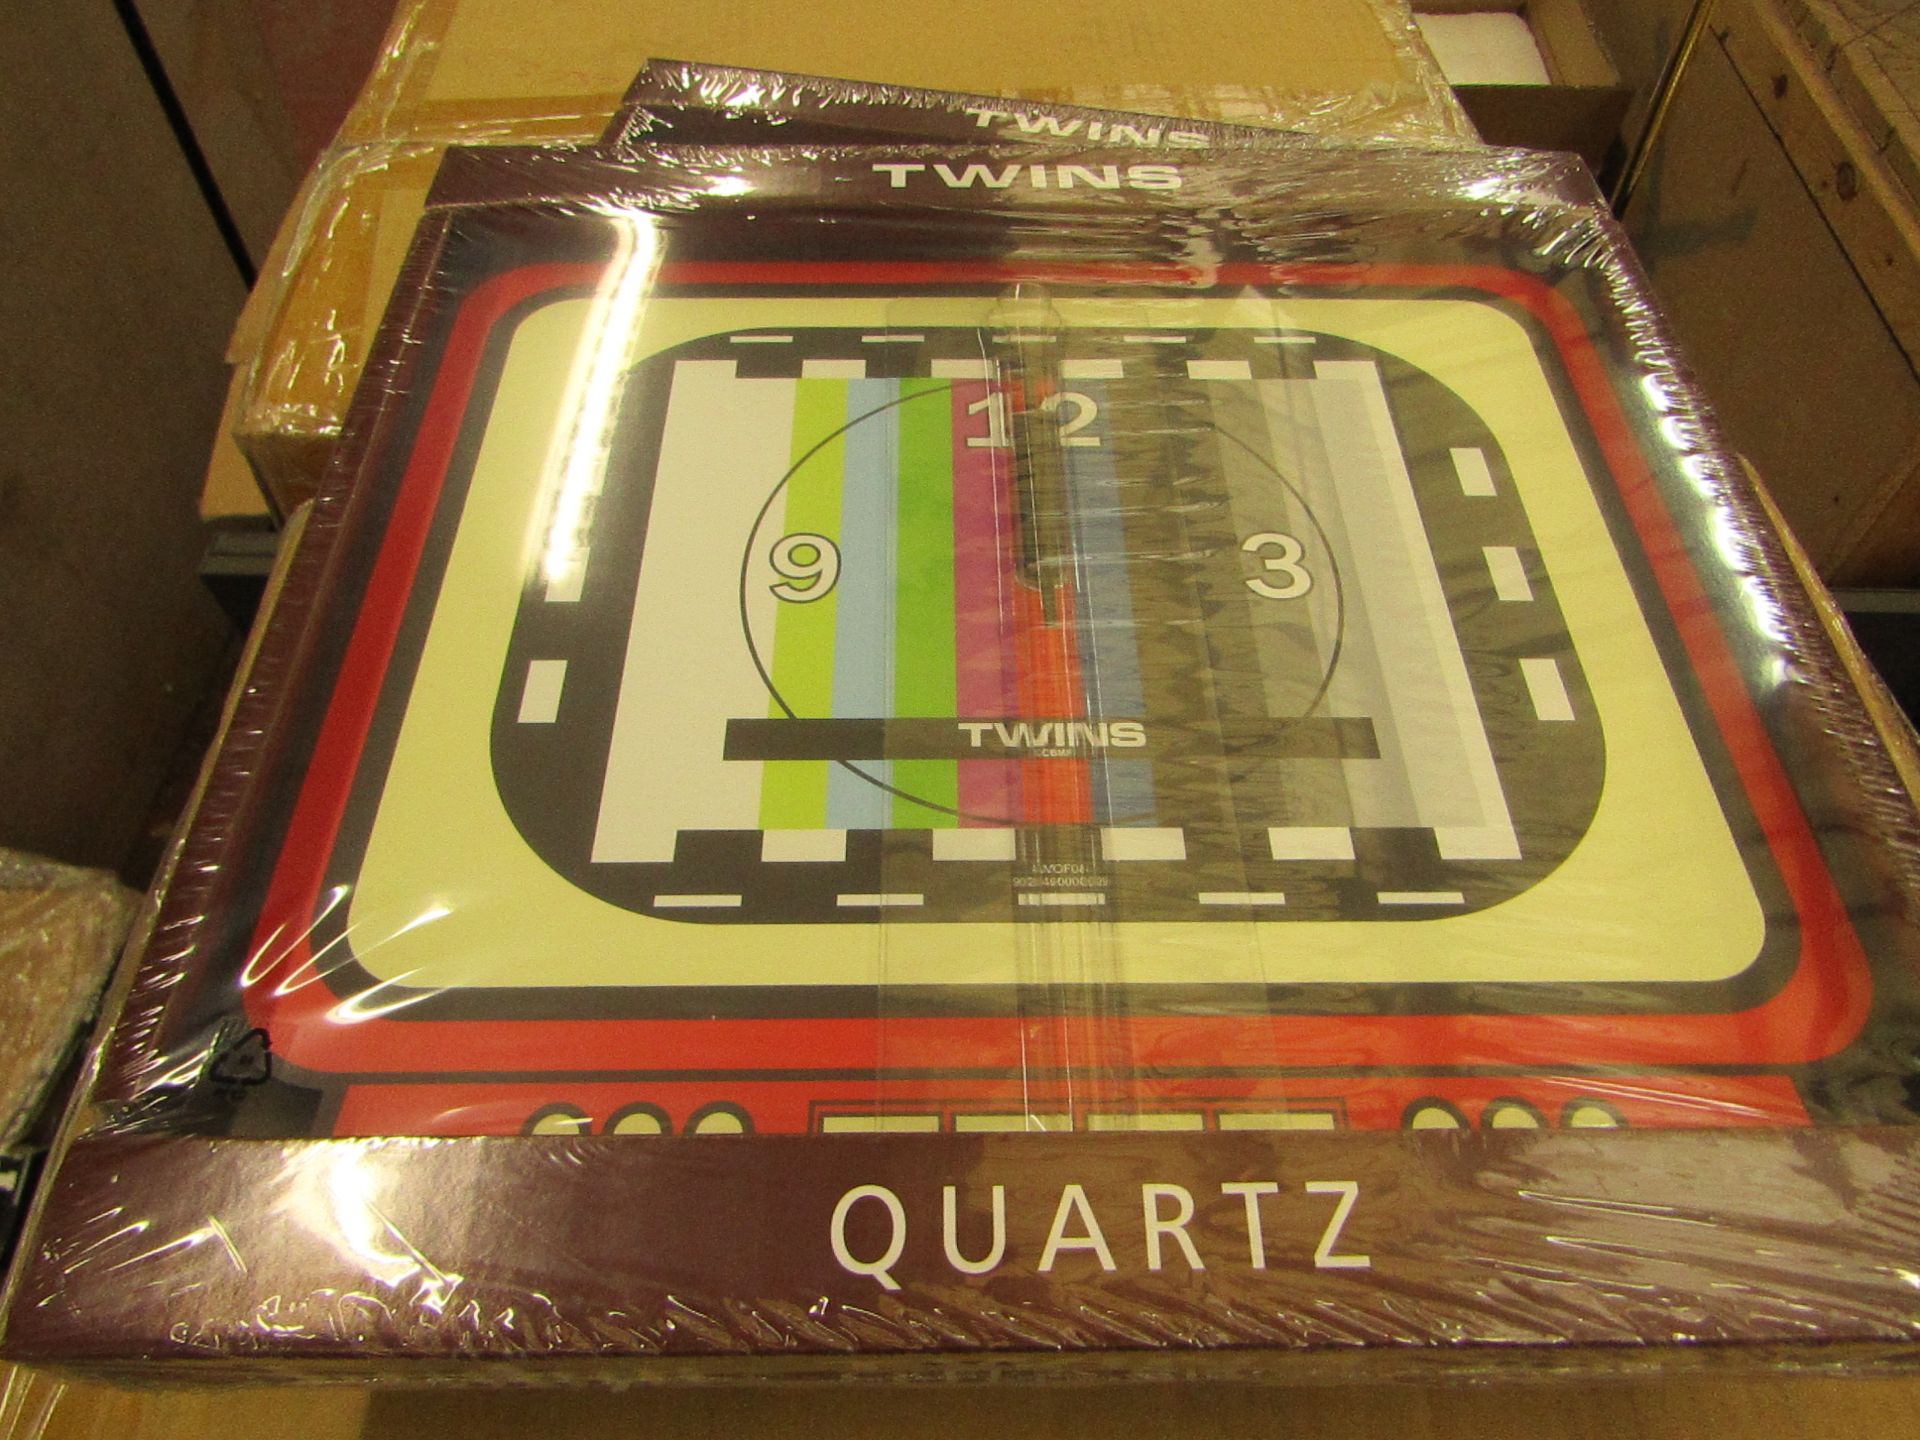 Twins Quartz Retro Style Wall Clock. New & Packaged